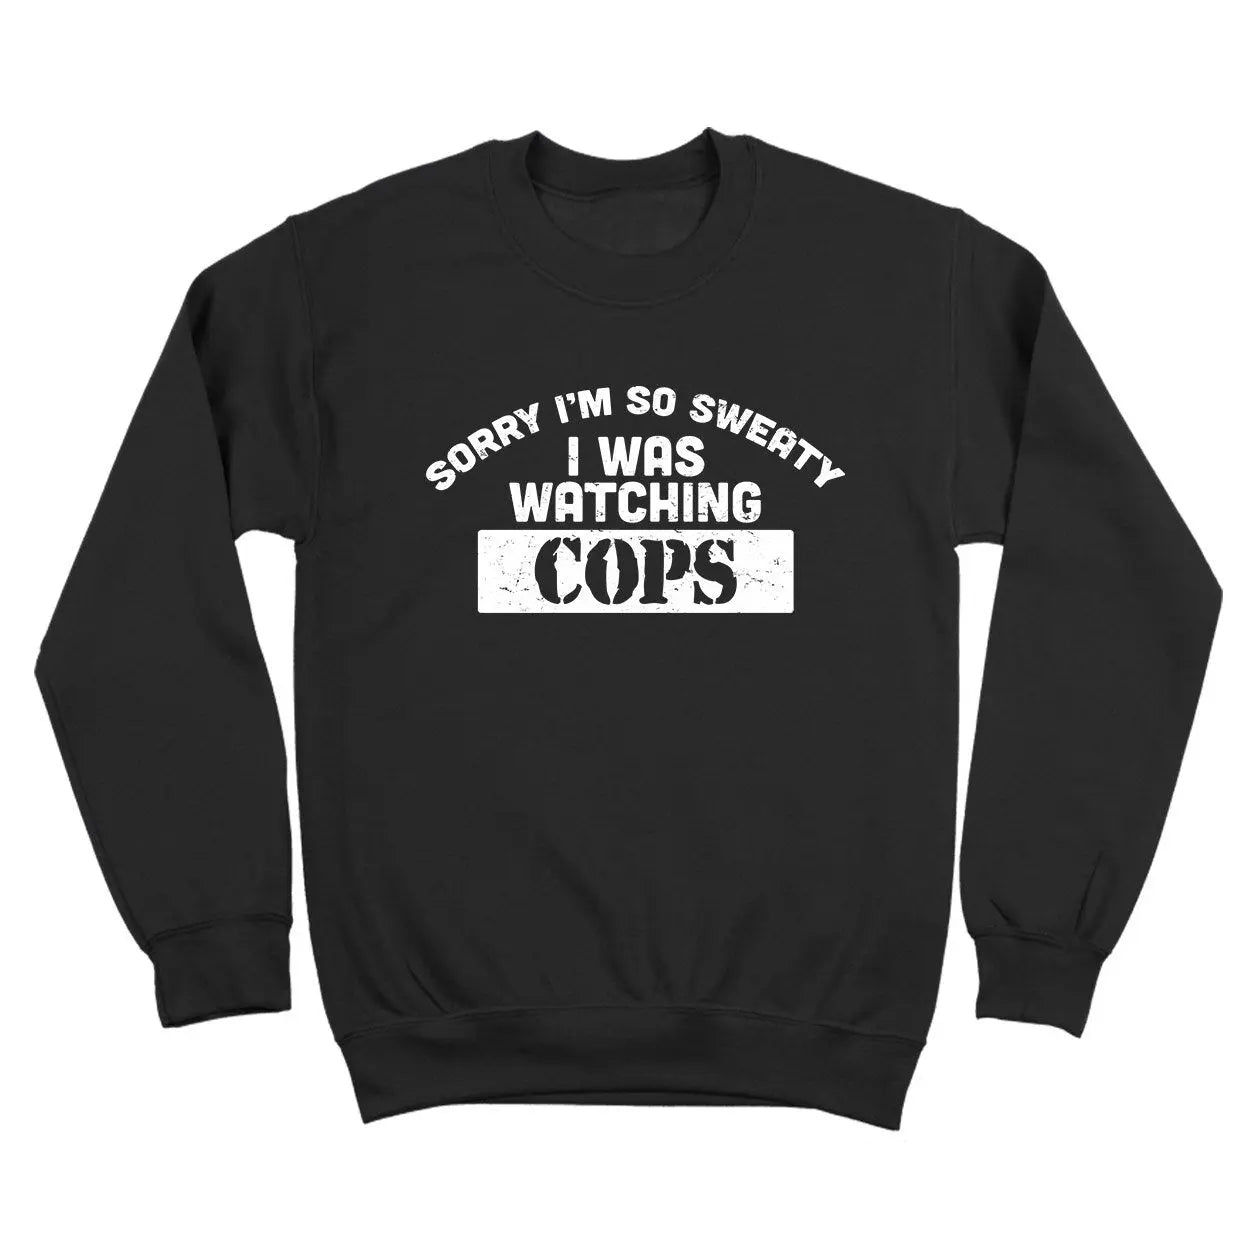 Sorry I Was Watching Cops Tshirt - Donkey Tees